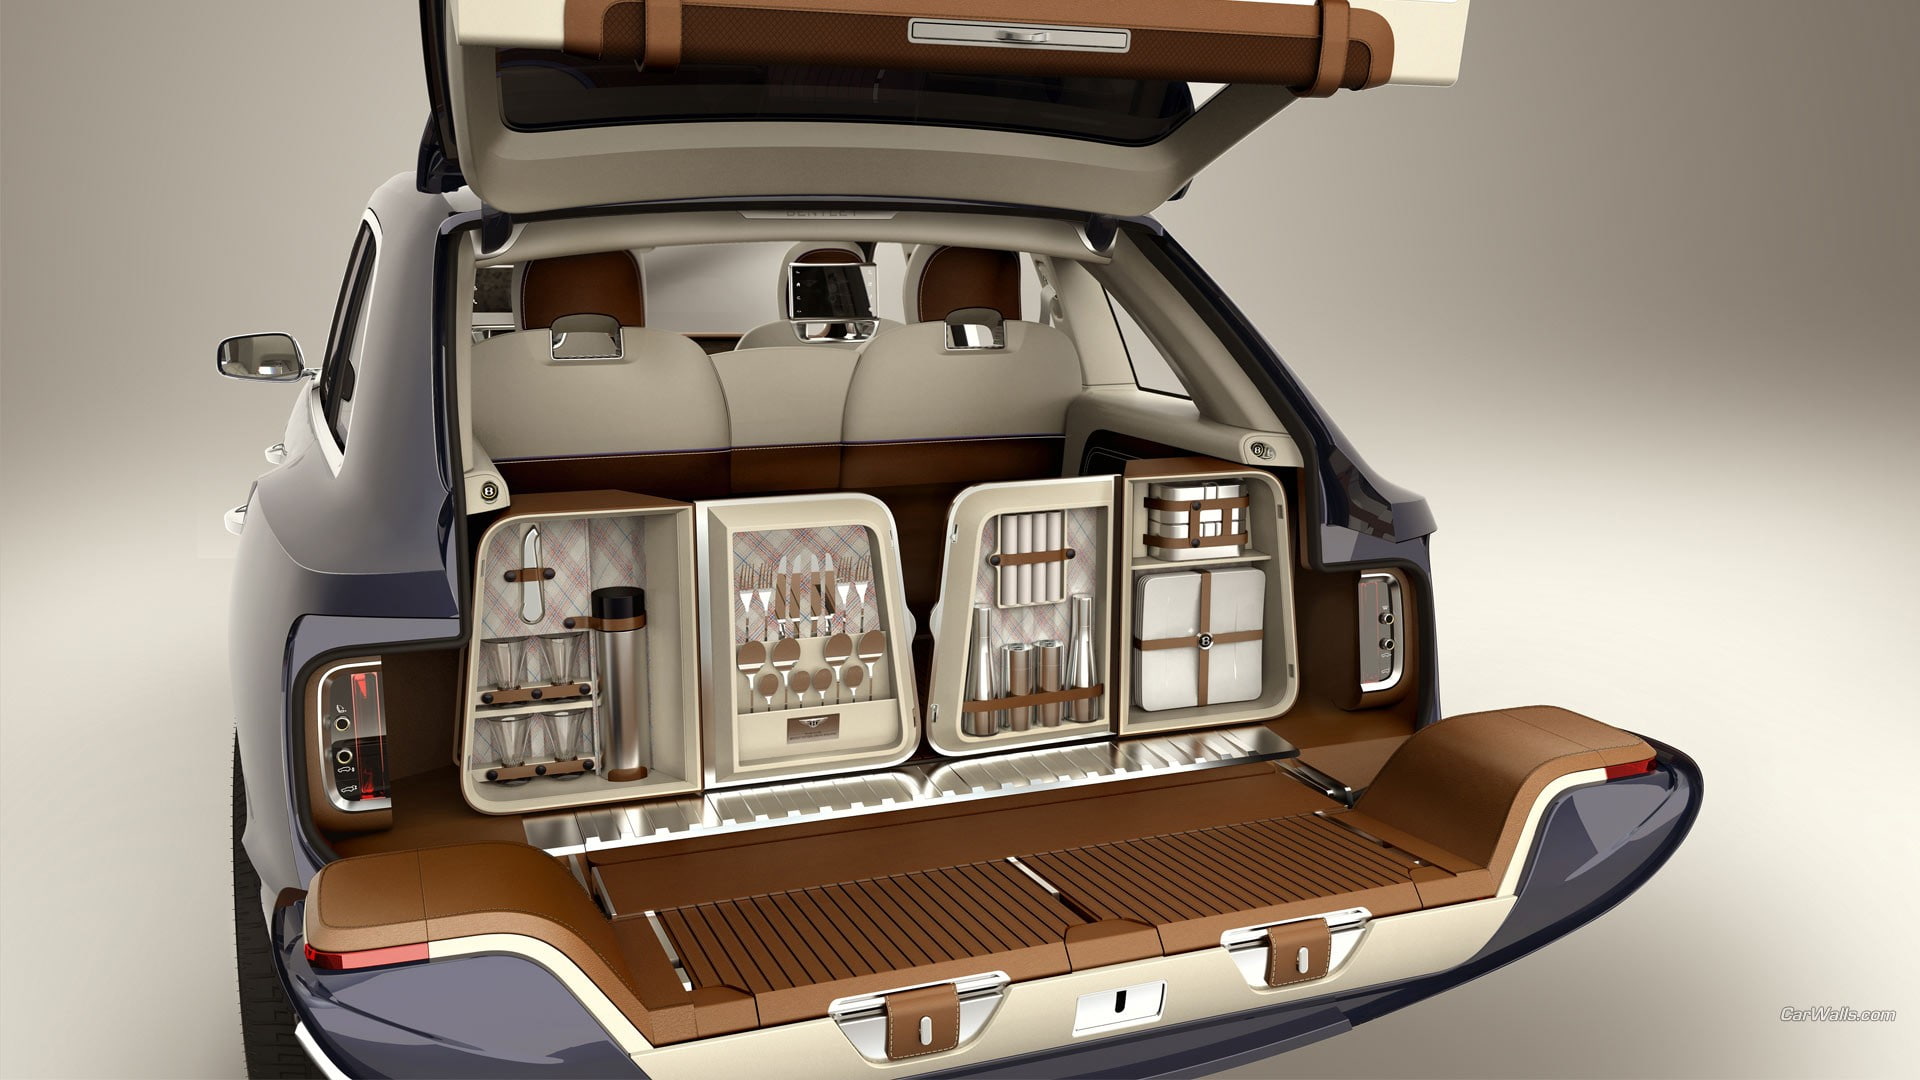 Bentley XP9, car interior, vehicle, indoors, no people, mode of transportation